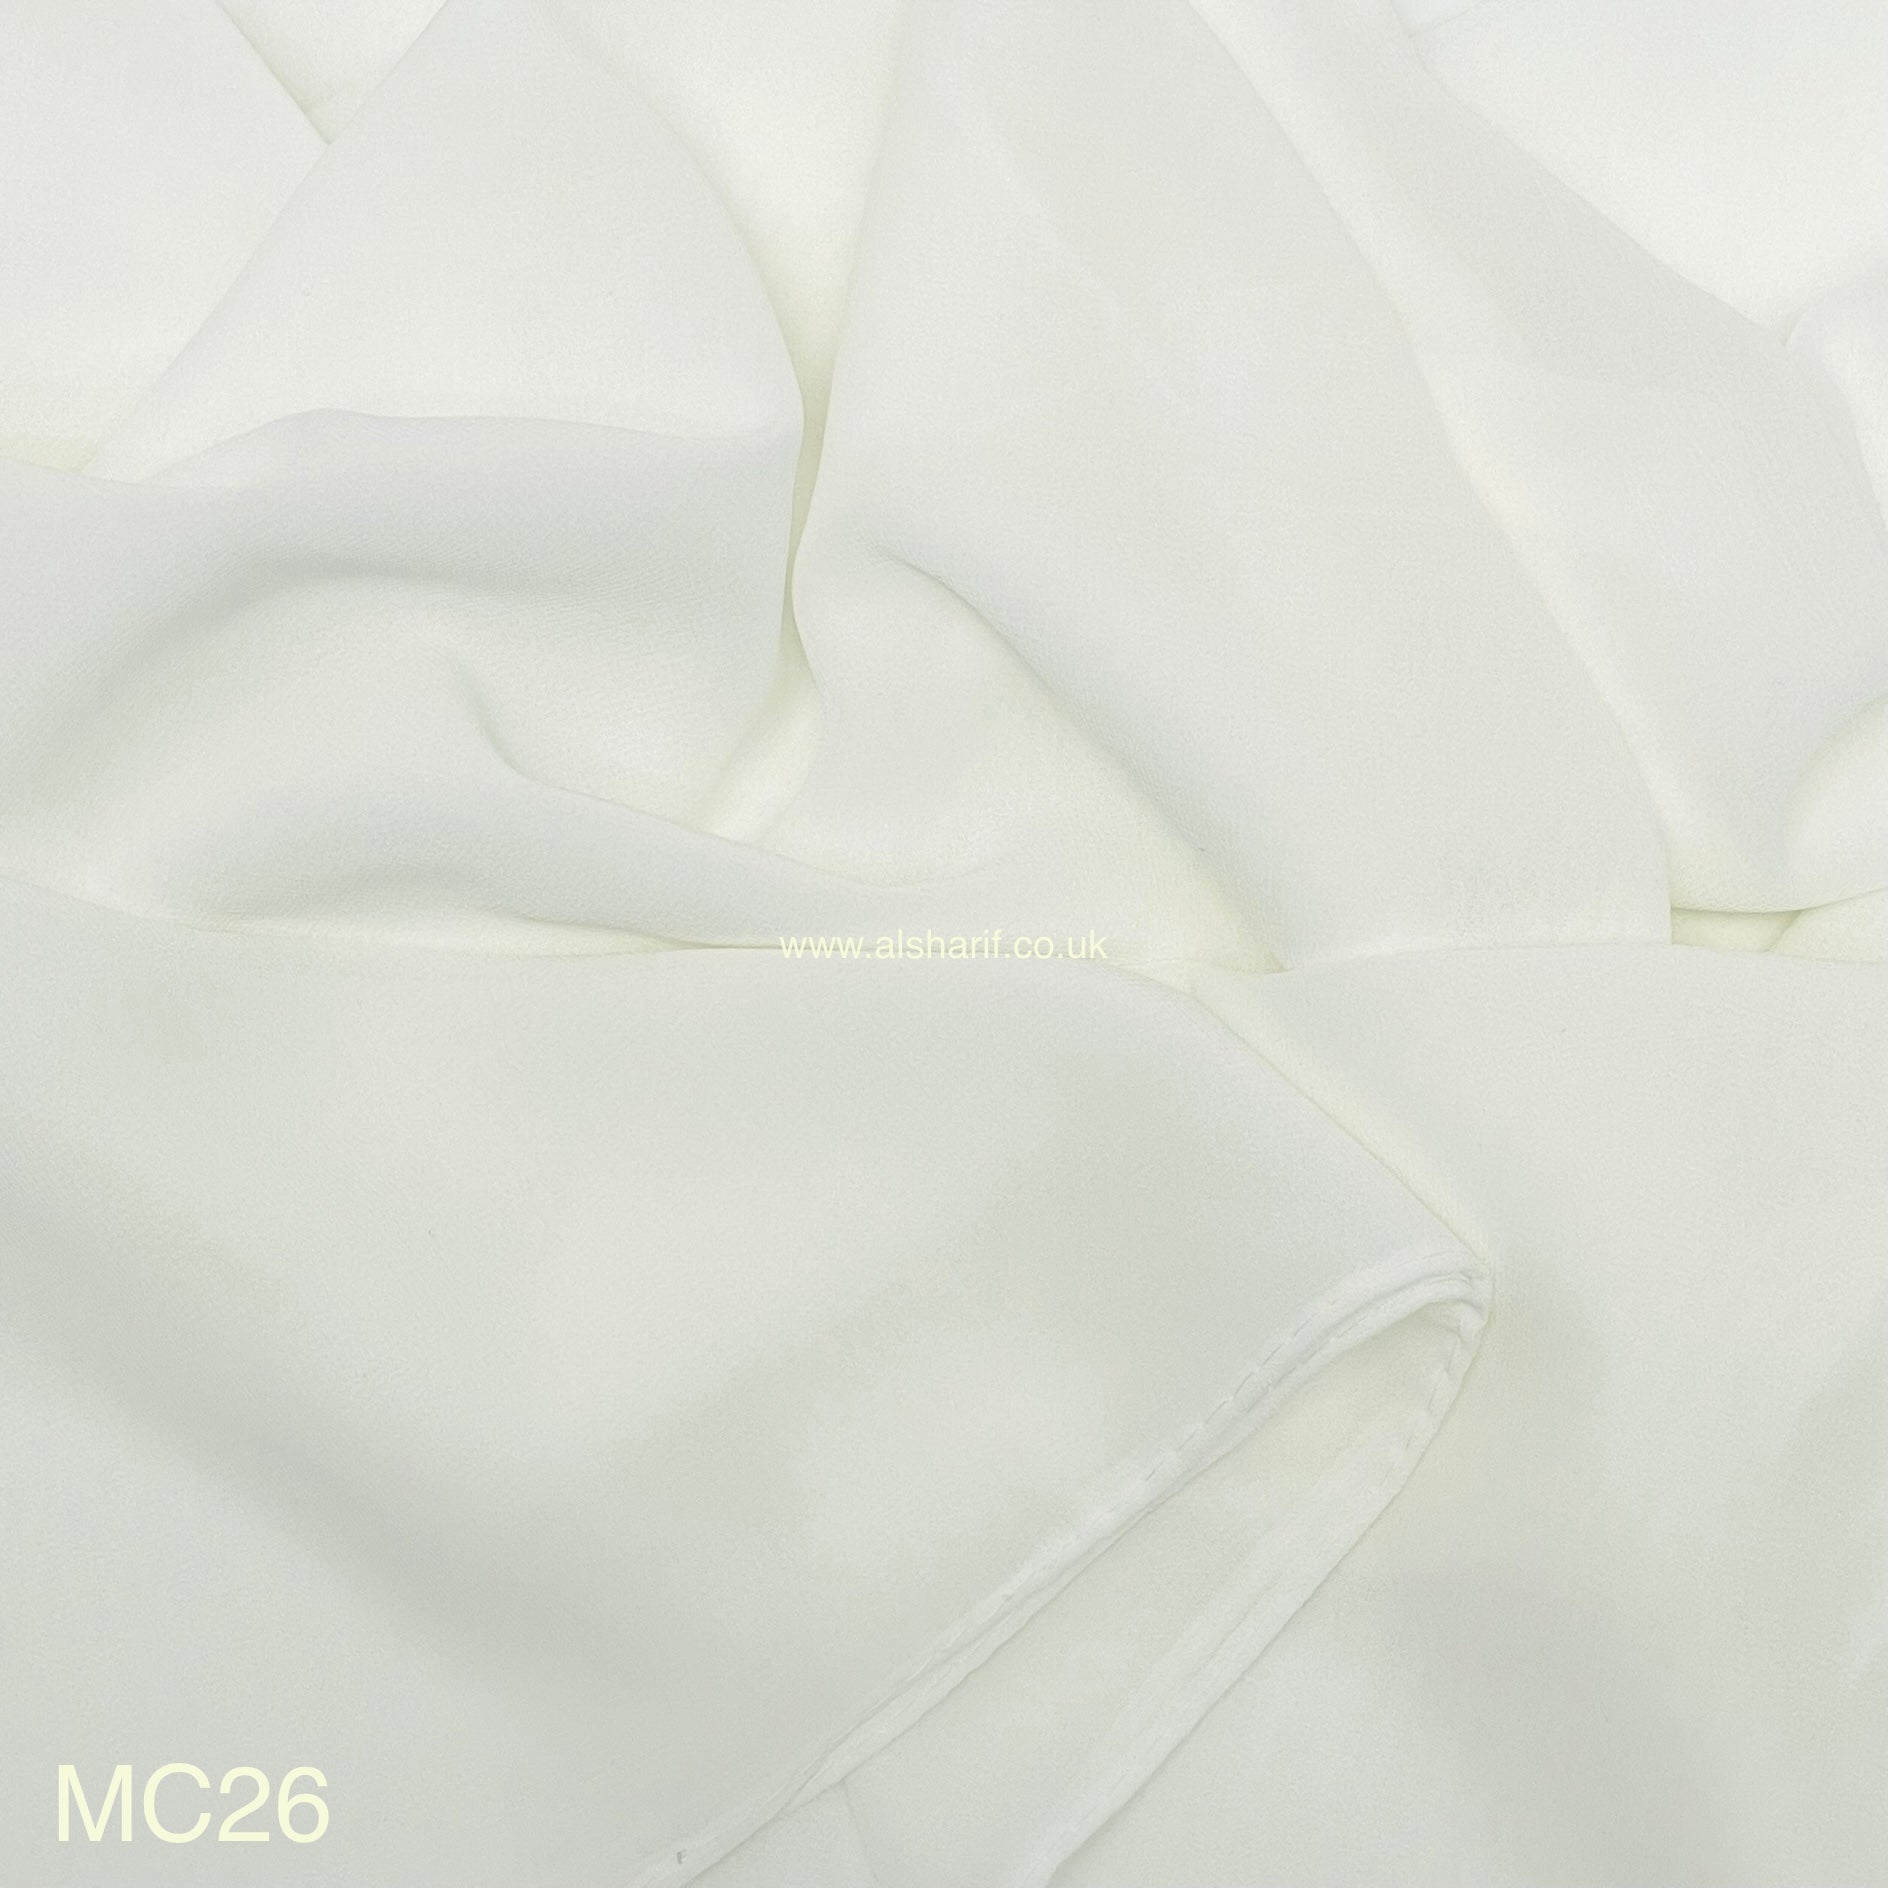 Maxi Chiffon Hijab 26 (Off White / Cream)